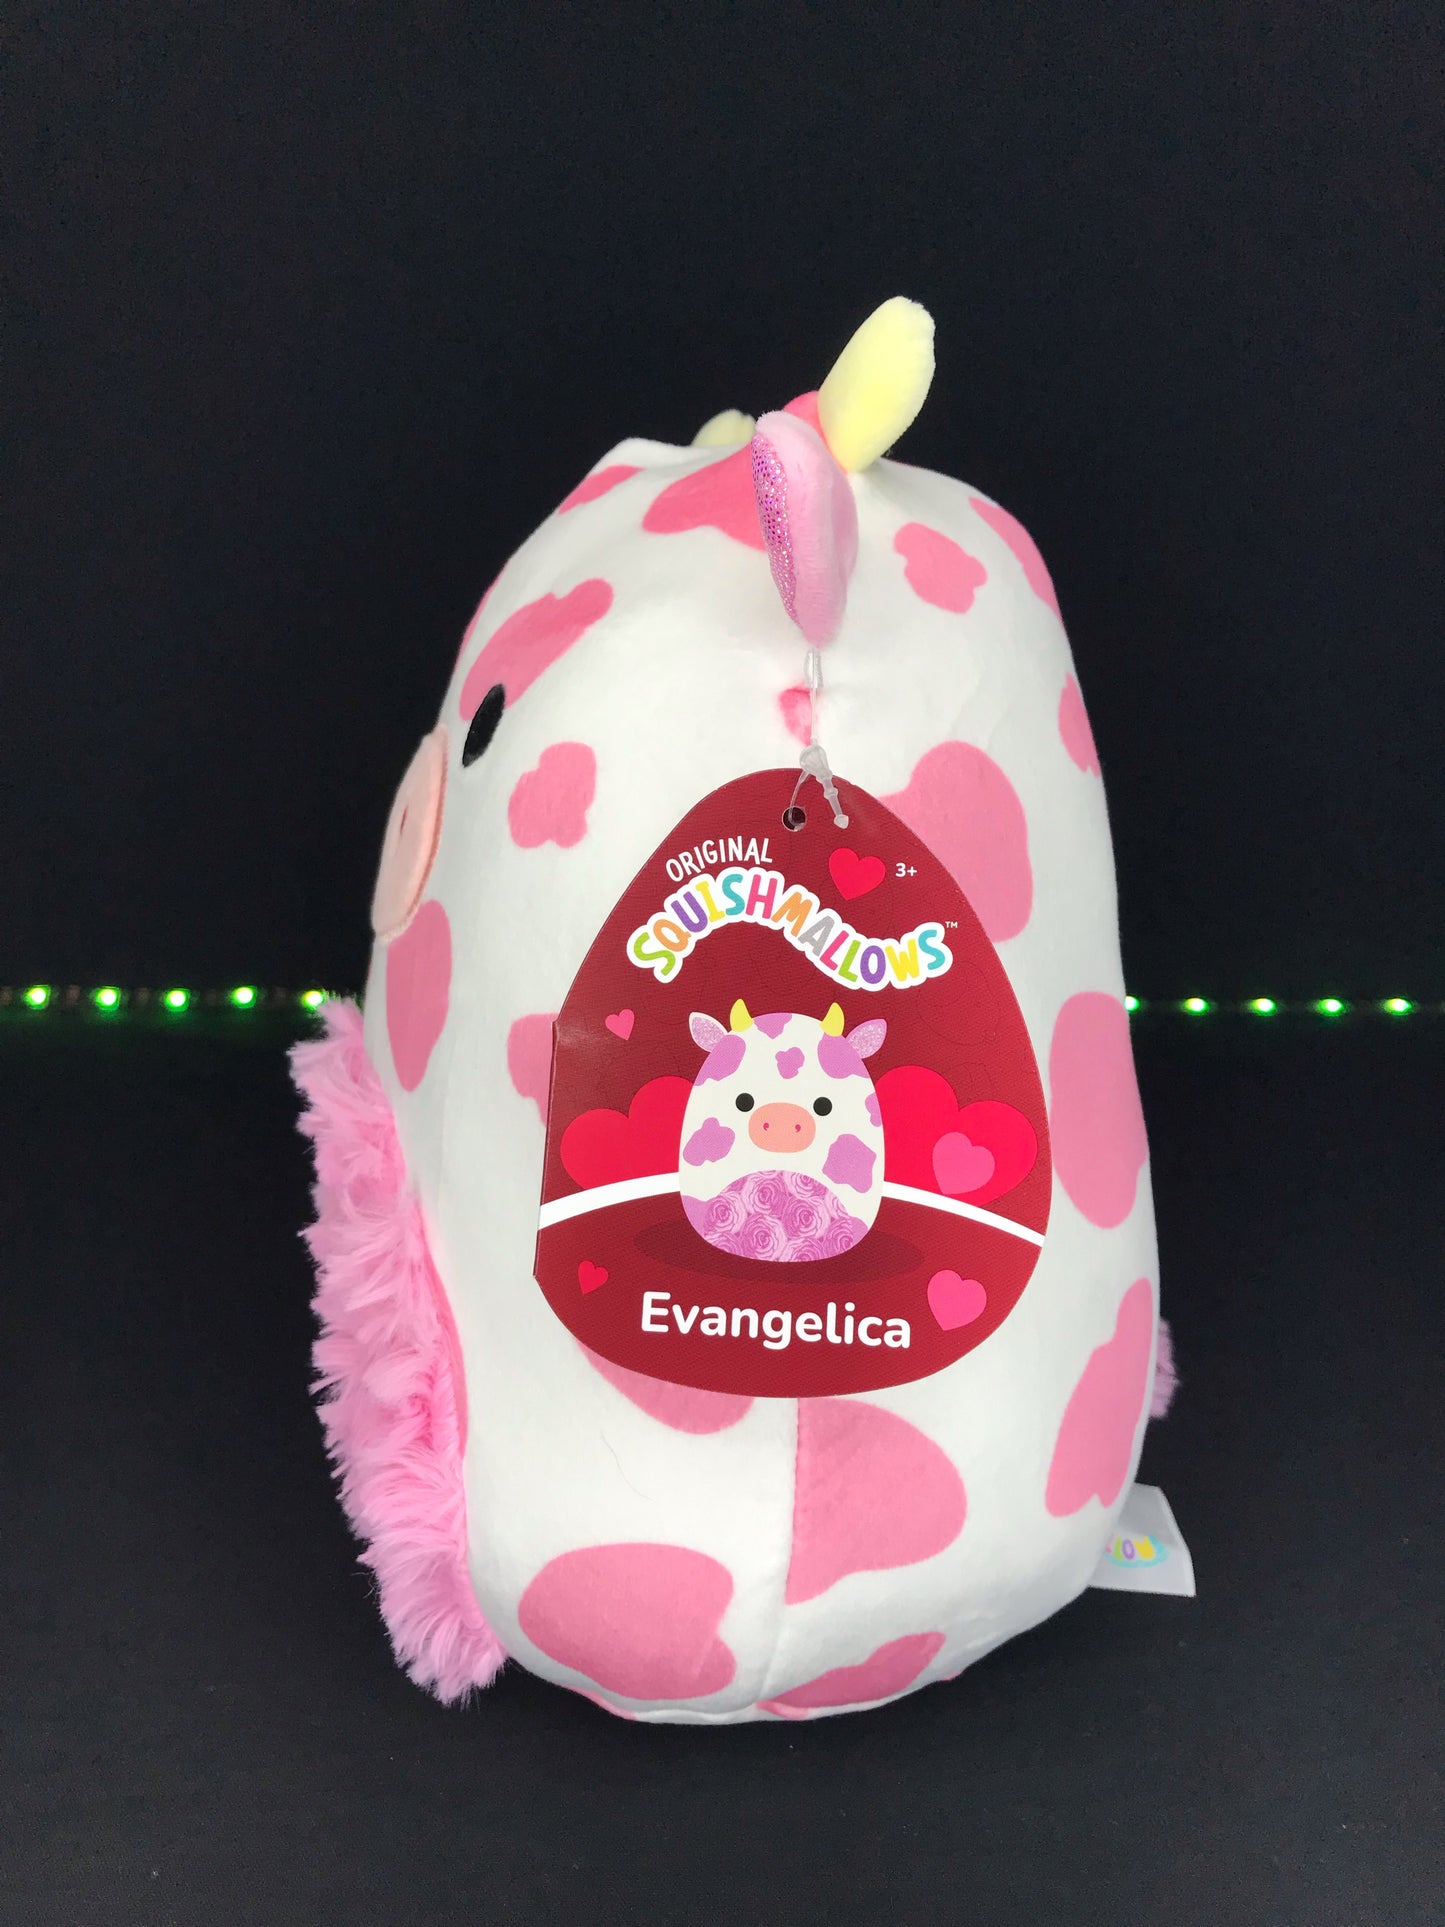 Squishmallow 8” Evangelica the Strawberry Cow